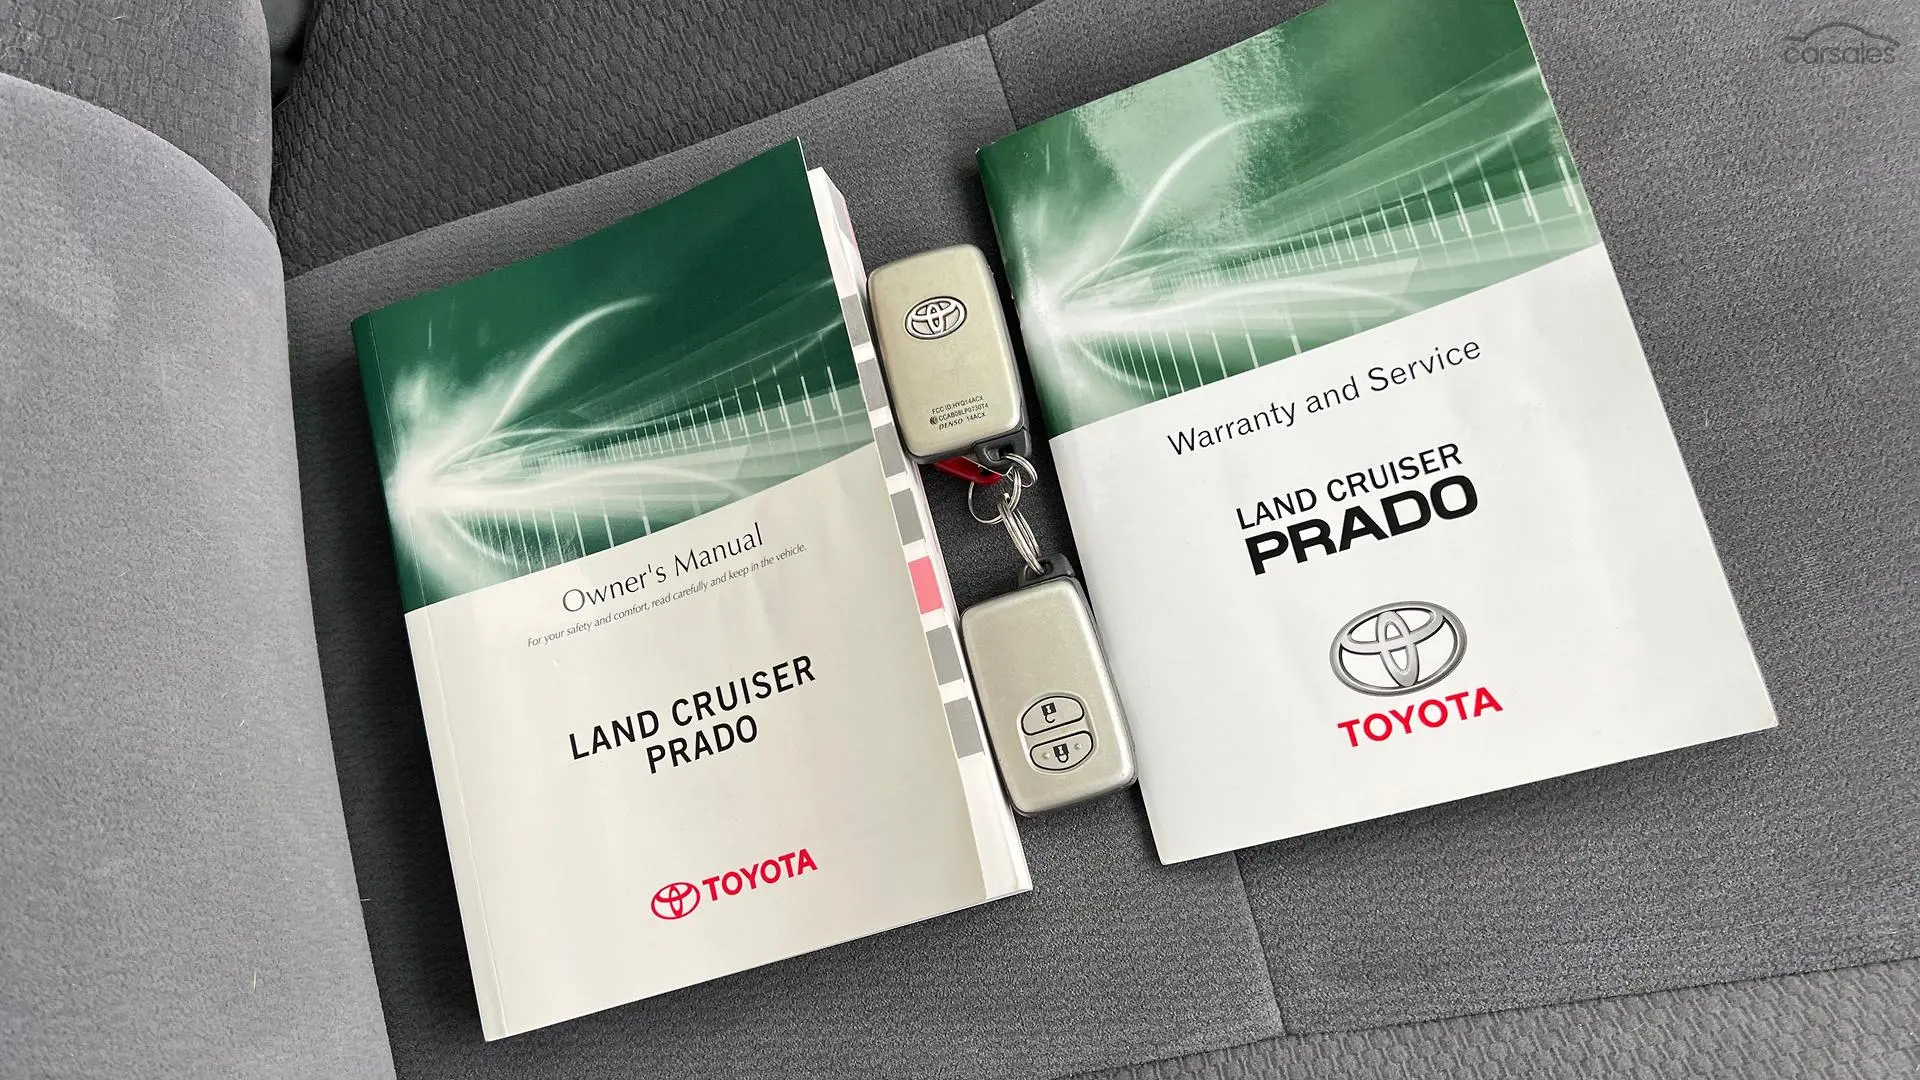 2013 Toyota Landcruiser Prado Image 24